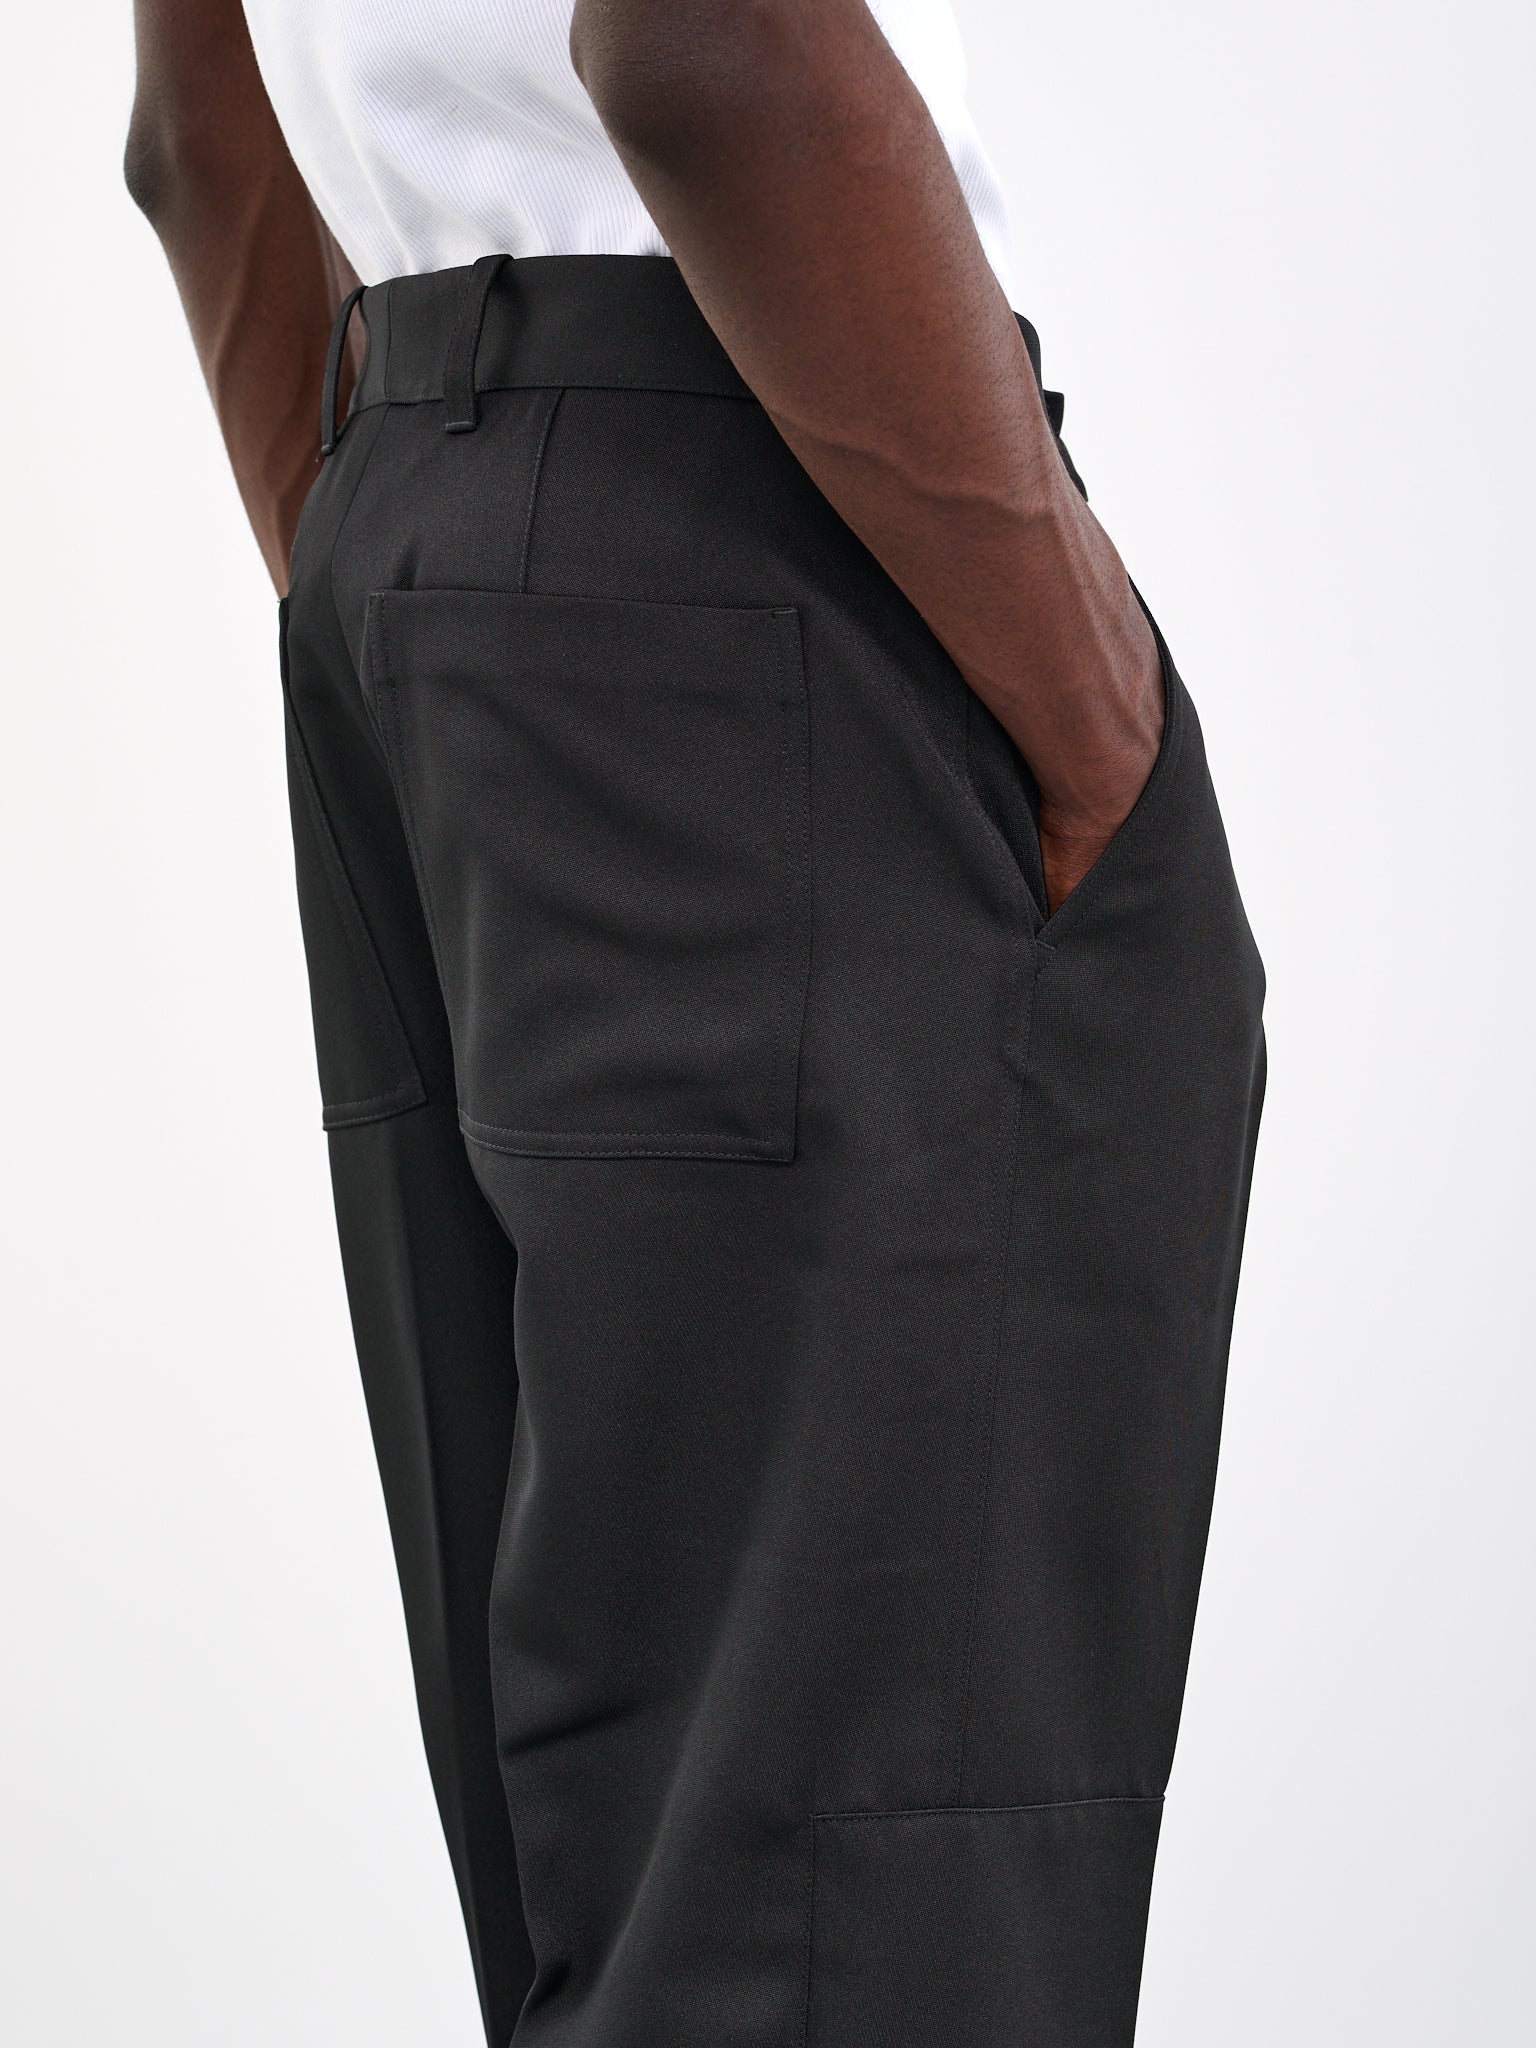 Paneled Trousers | H. Lorenzo - detail 1